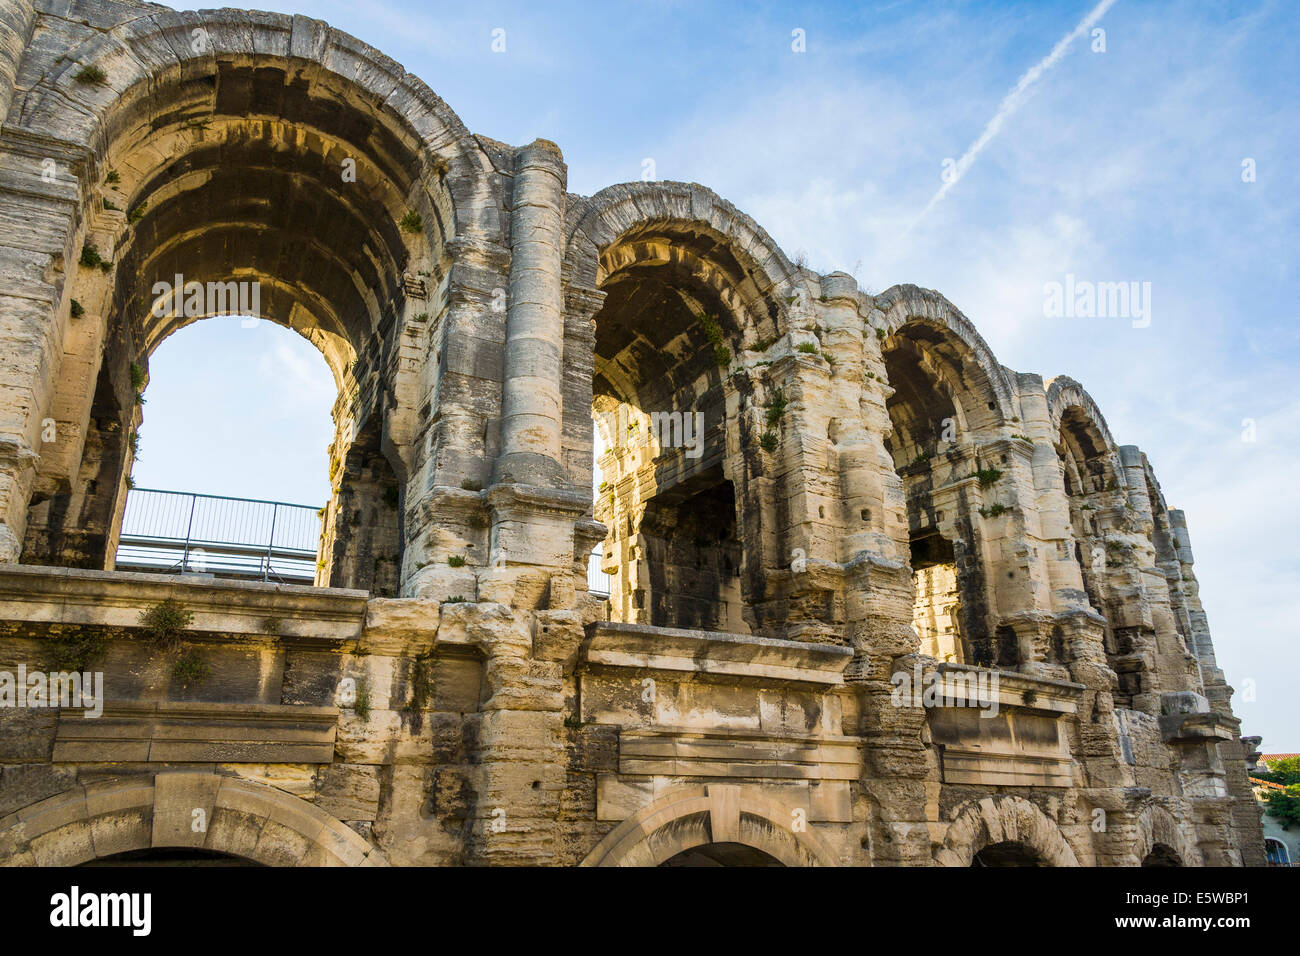 Exterieur des Amphitheater oder Aromaten, Arles, Frankreich. JMH6275 Stockfoto